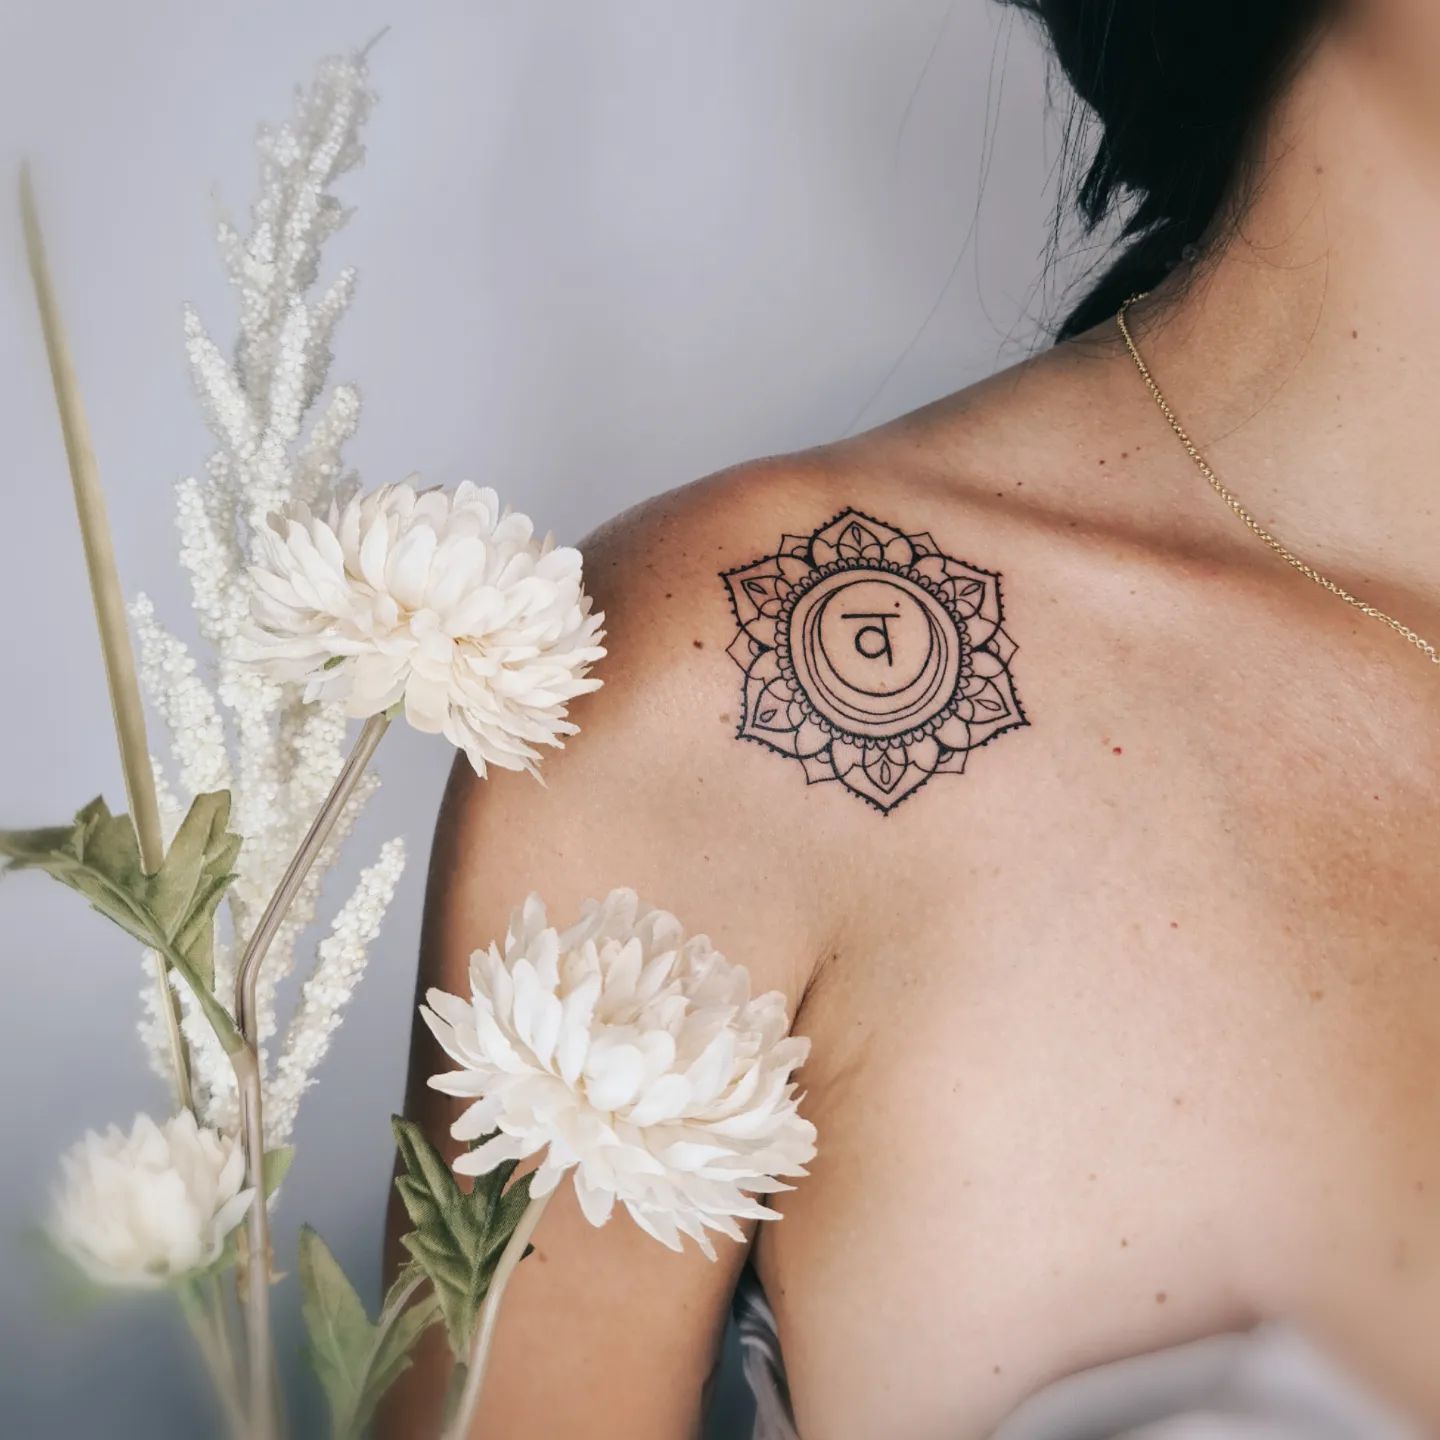 Buddha chakra Tattoo designed @tribalinktattoos A Buddha chakra tattoo  typically incorporates symbols representing the seven chakras sy... |  Instagram